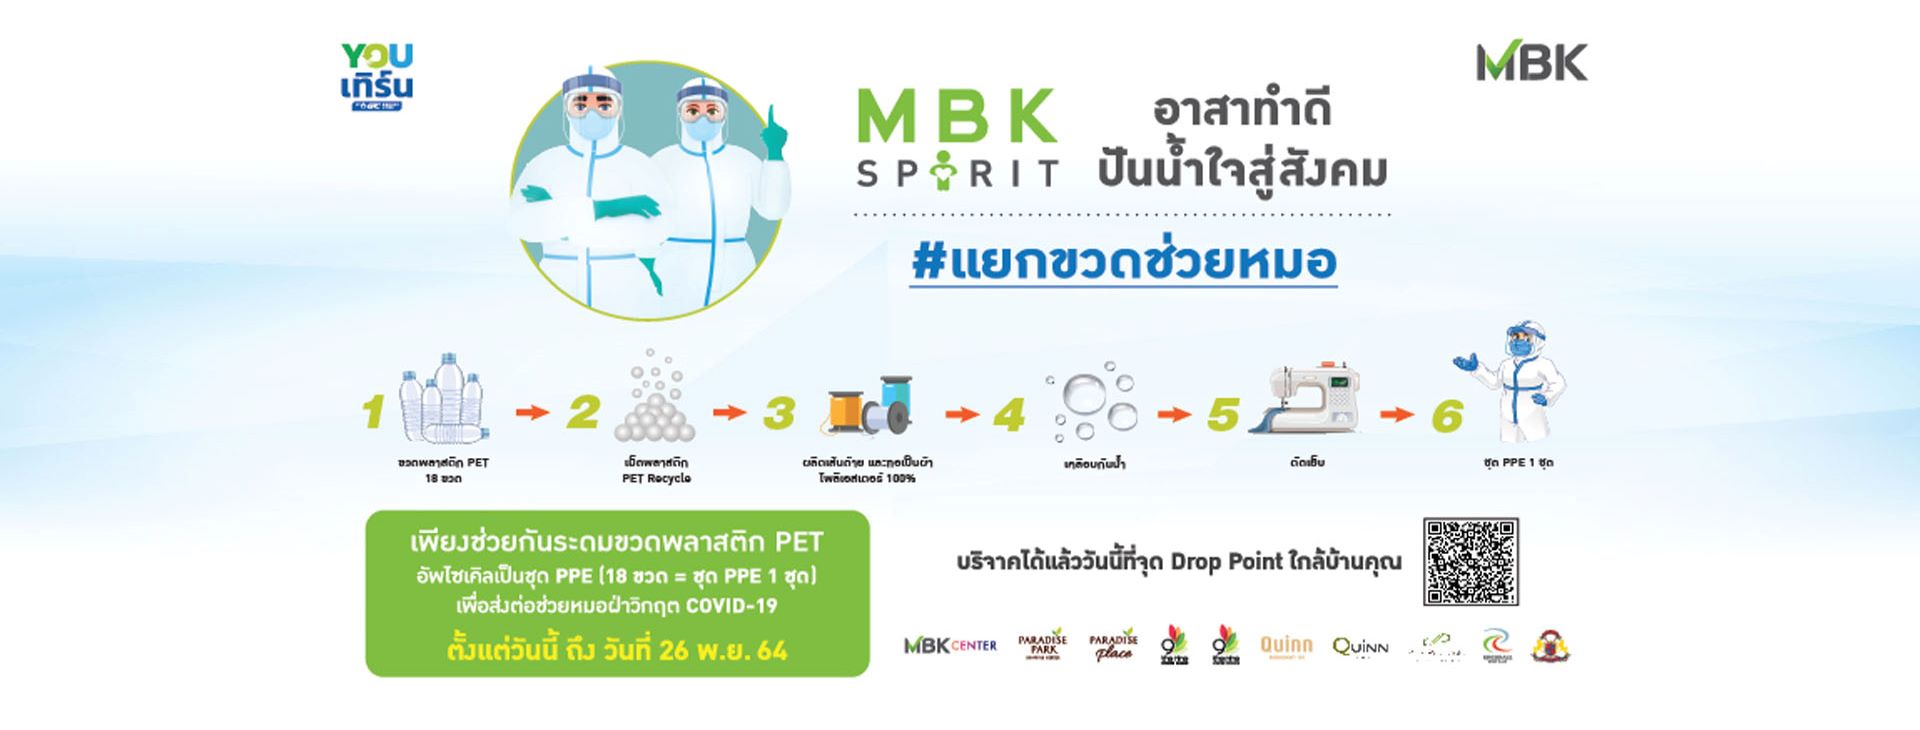 MBK Spirit อาสาทำดี ปันน้ำในสู่สังคม